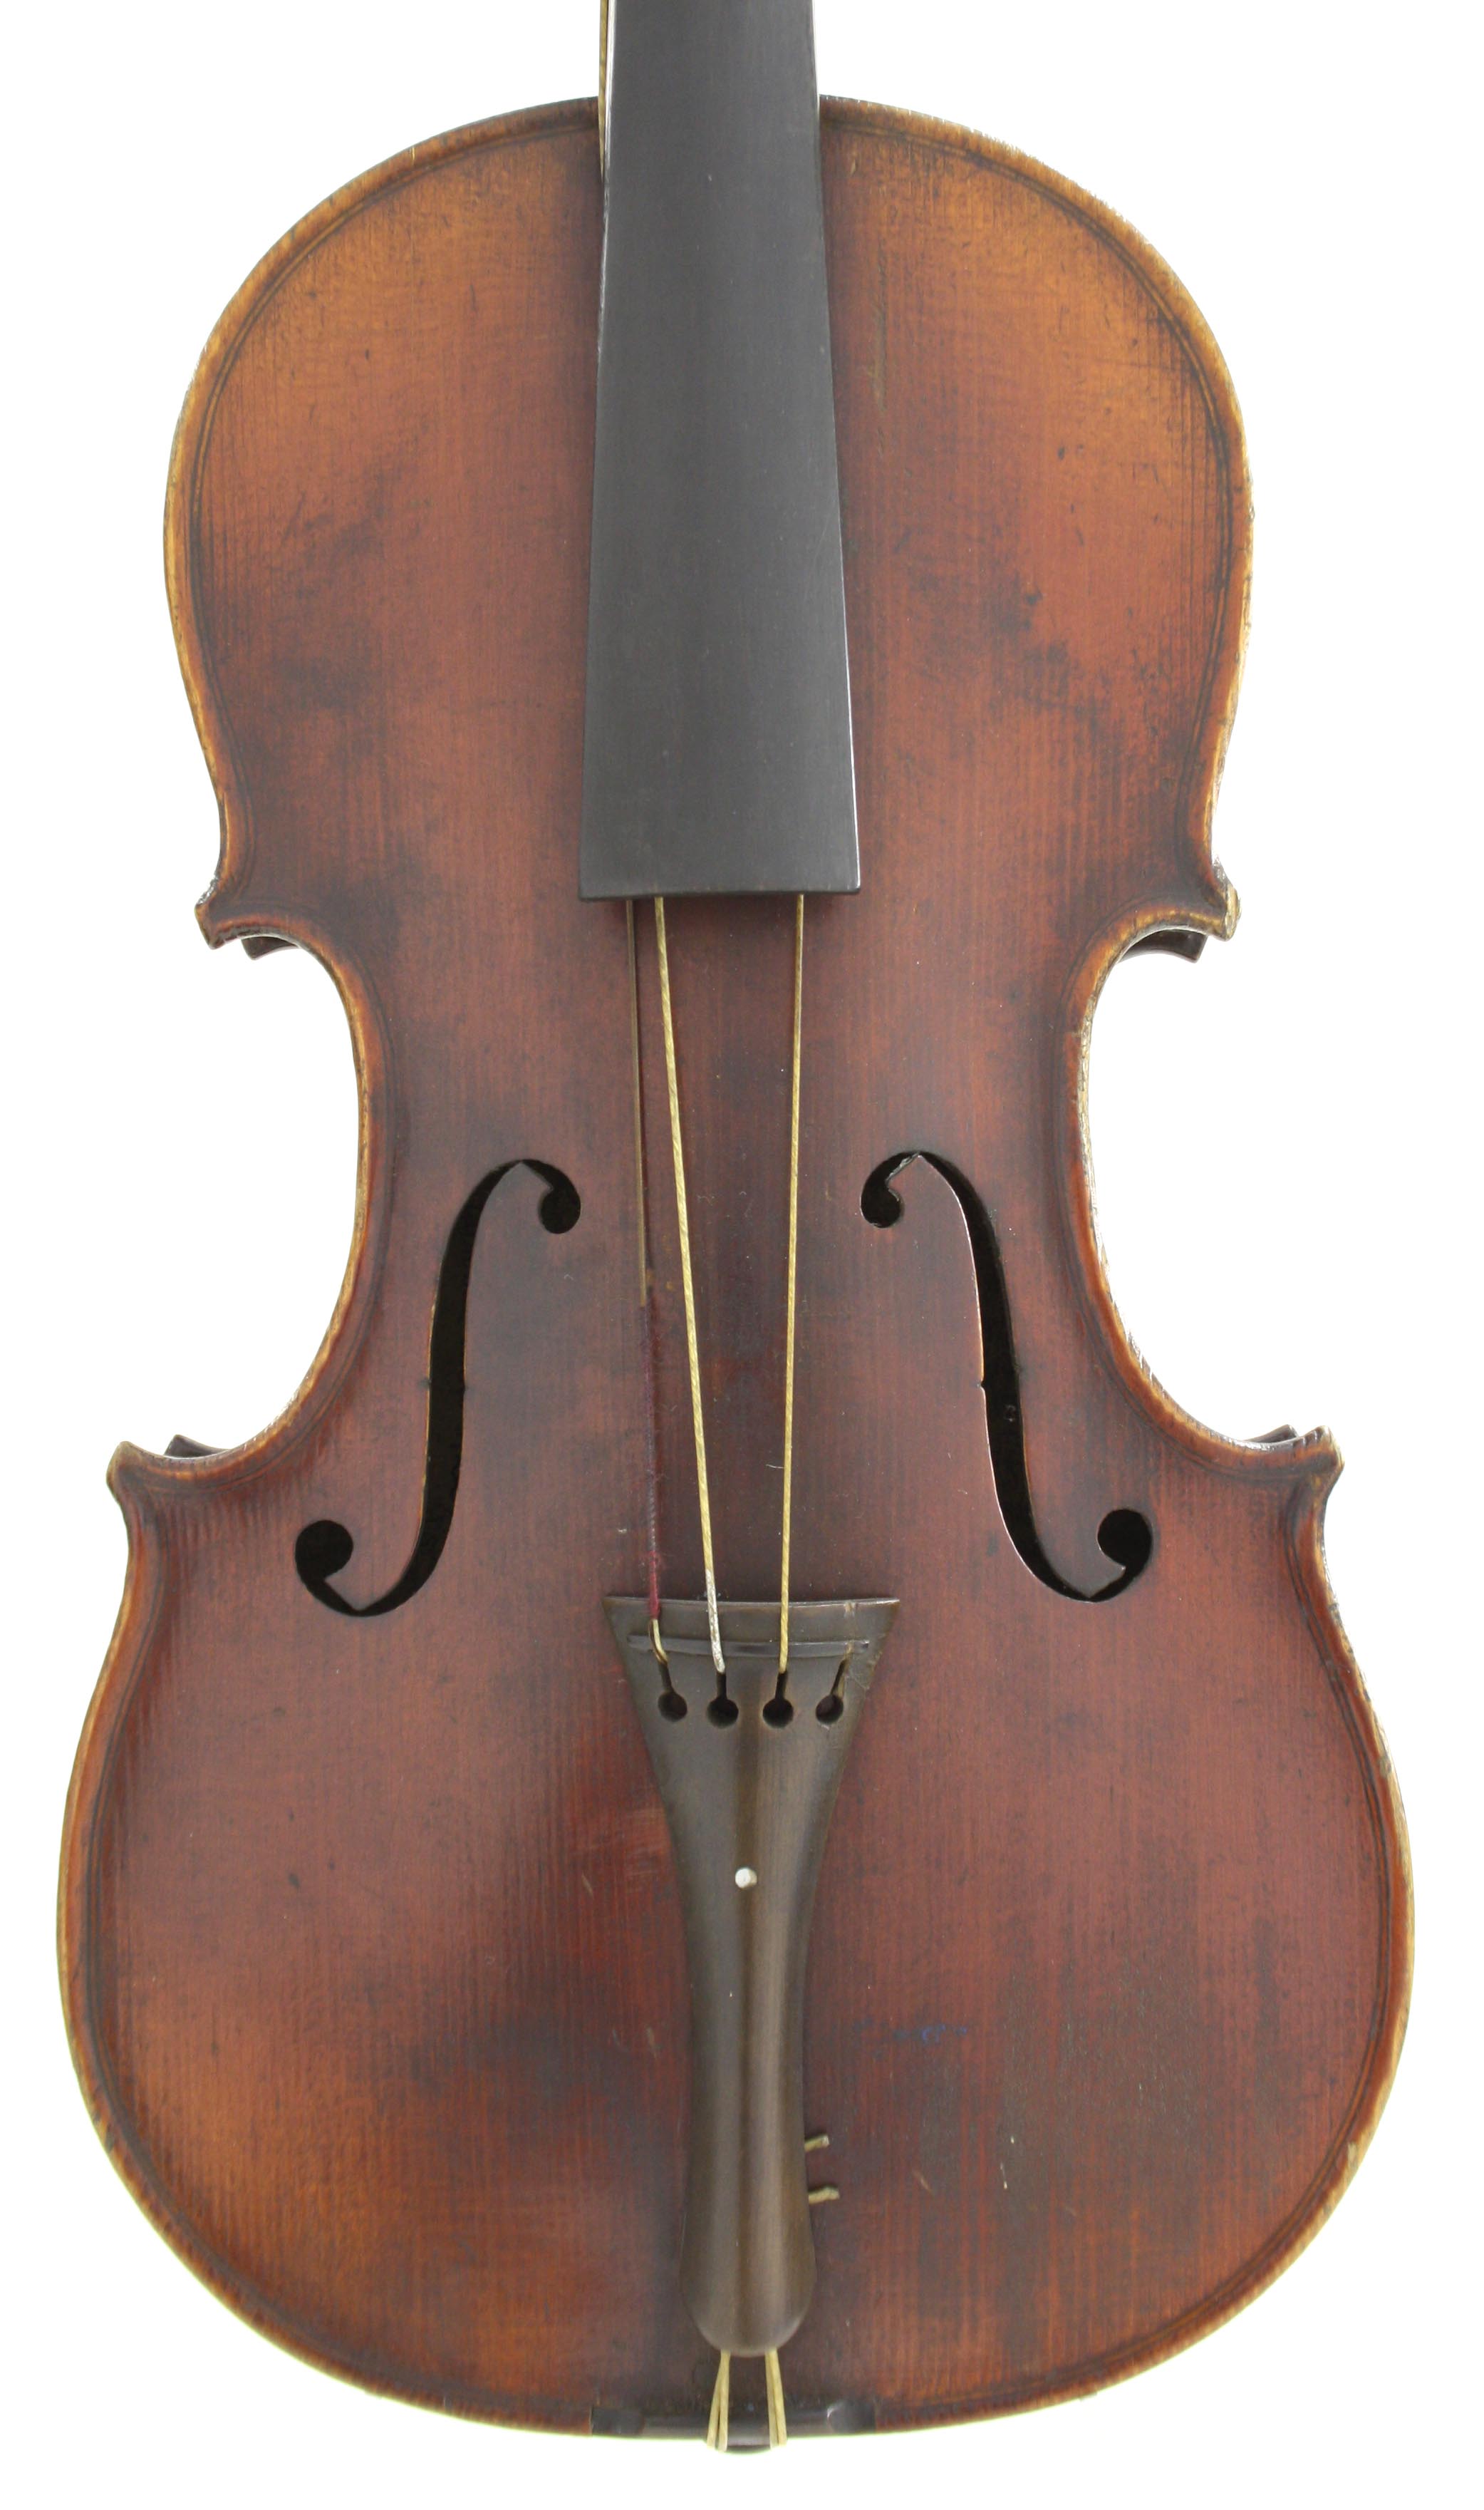 Neuner & Hornsteiner violin circa 1890, 13 1/4", 33.70cm